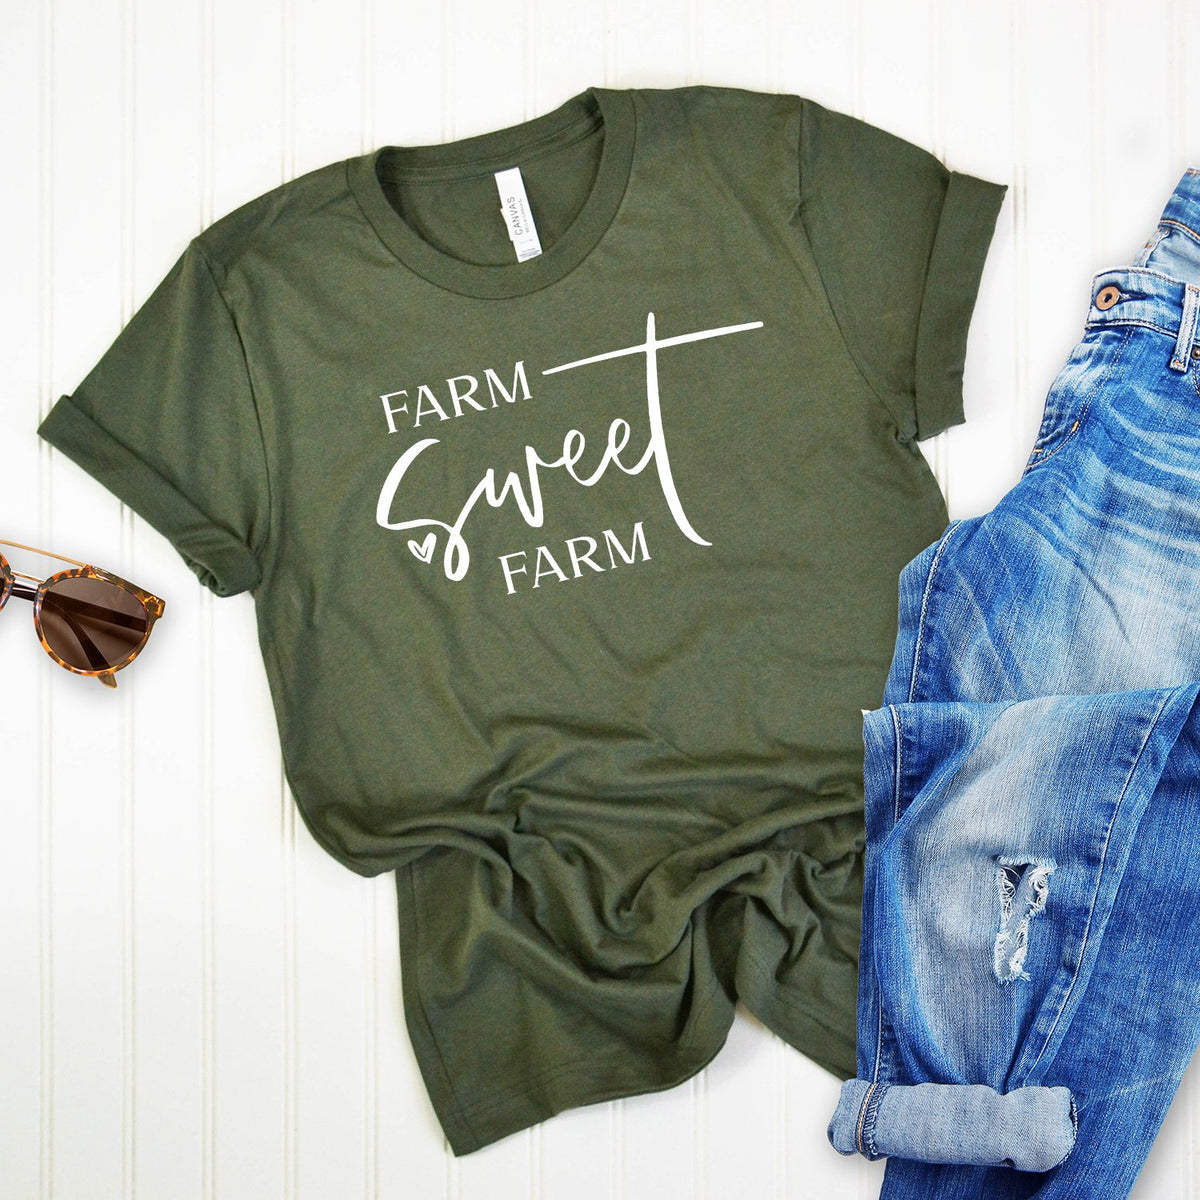 Farm Sweet Farm - Short Sleeve Tee Shirt